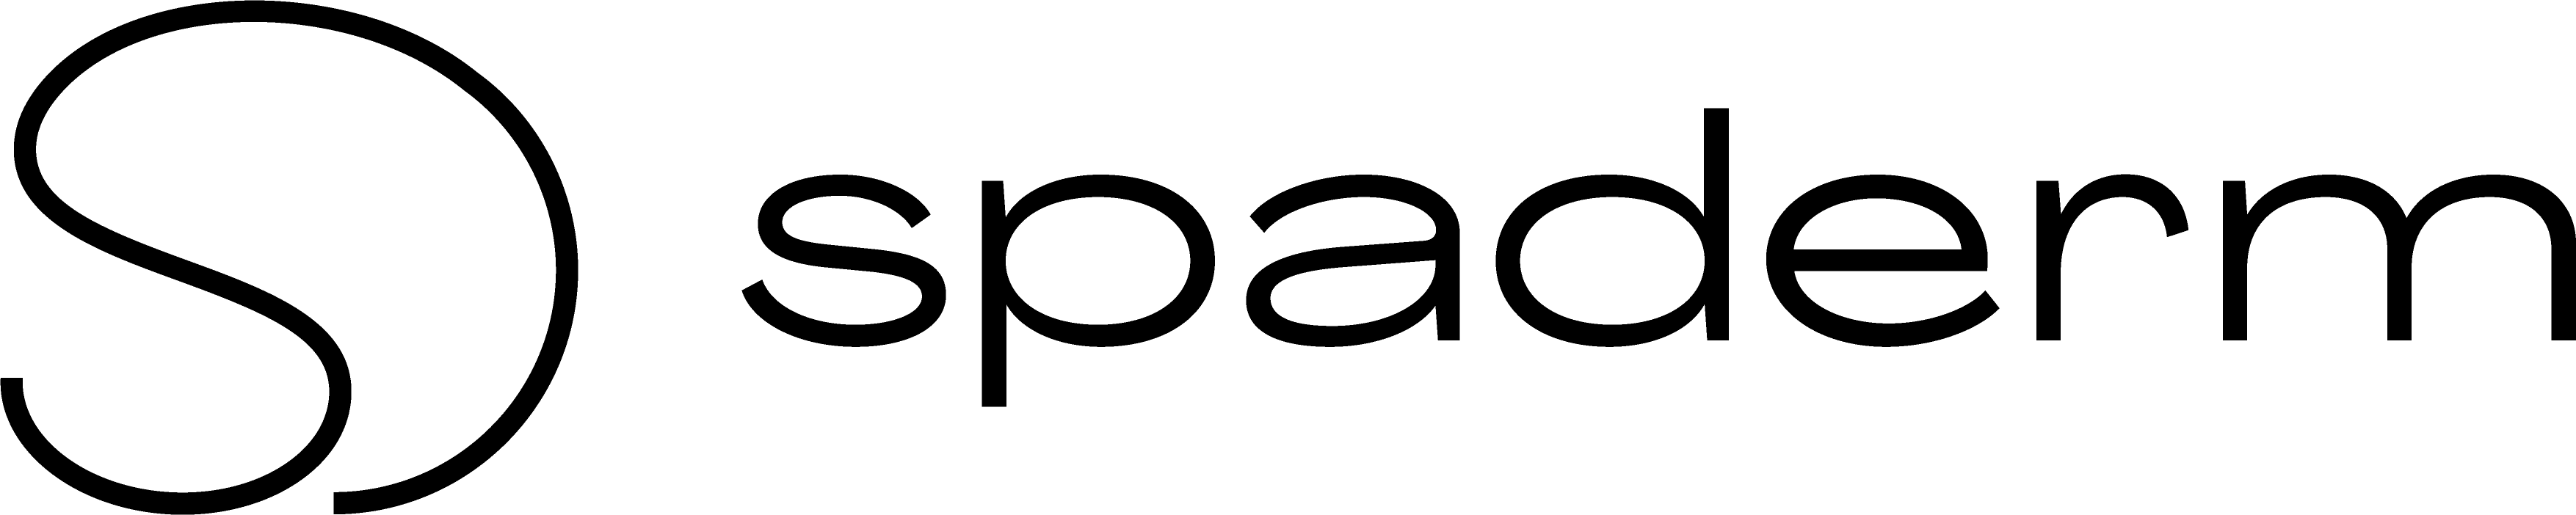 Spaderm_logo_podklady-01_horizontal_black